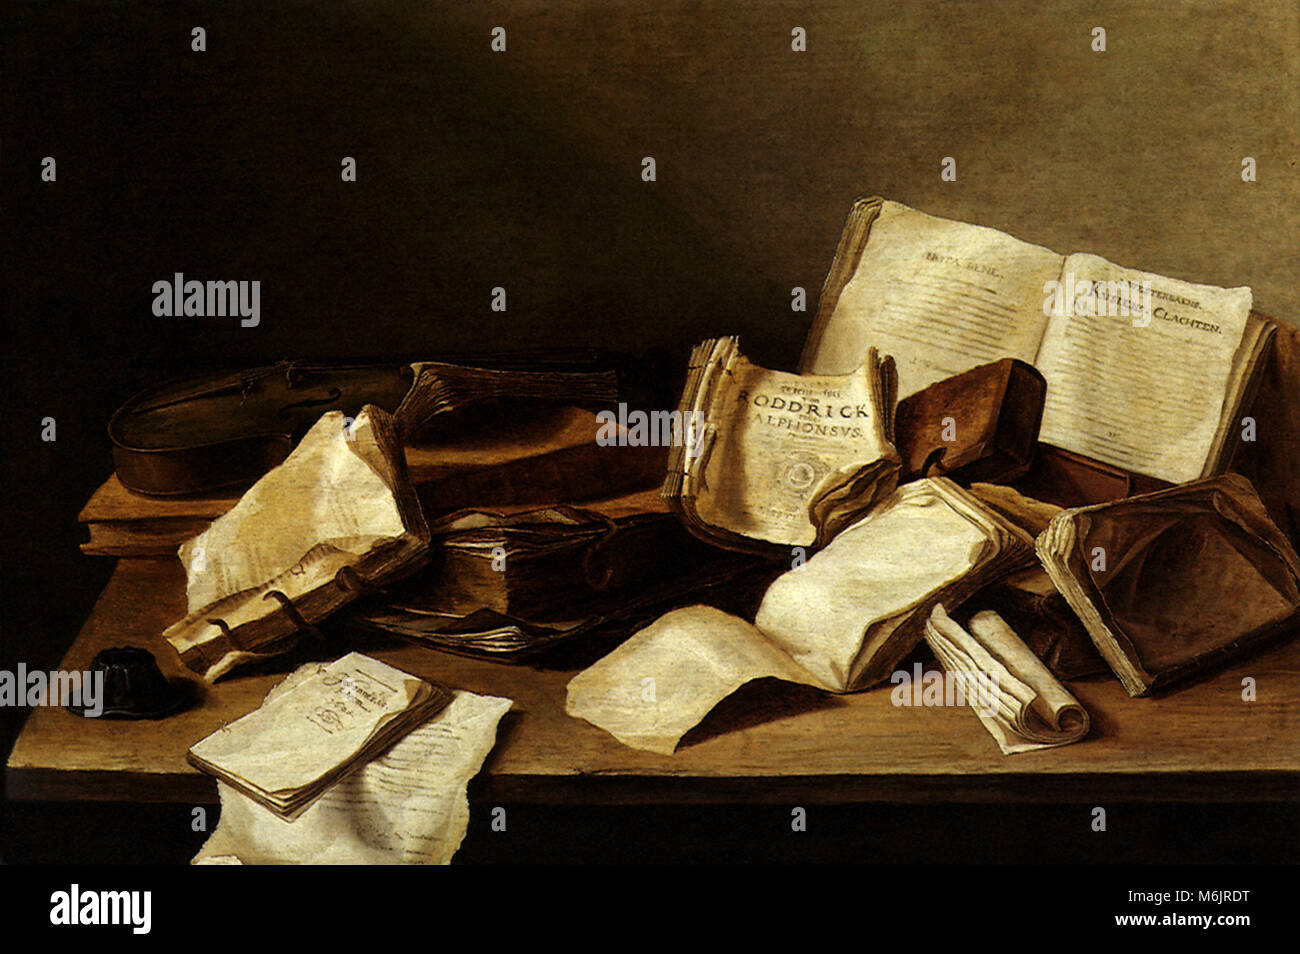 Still Life with Books, Heem, Jan Davidsz de, 1628. Banque D'Images